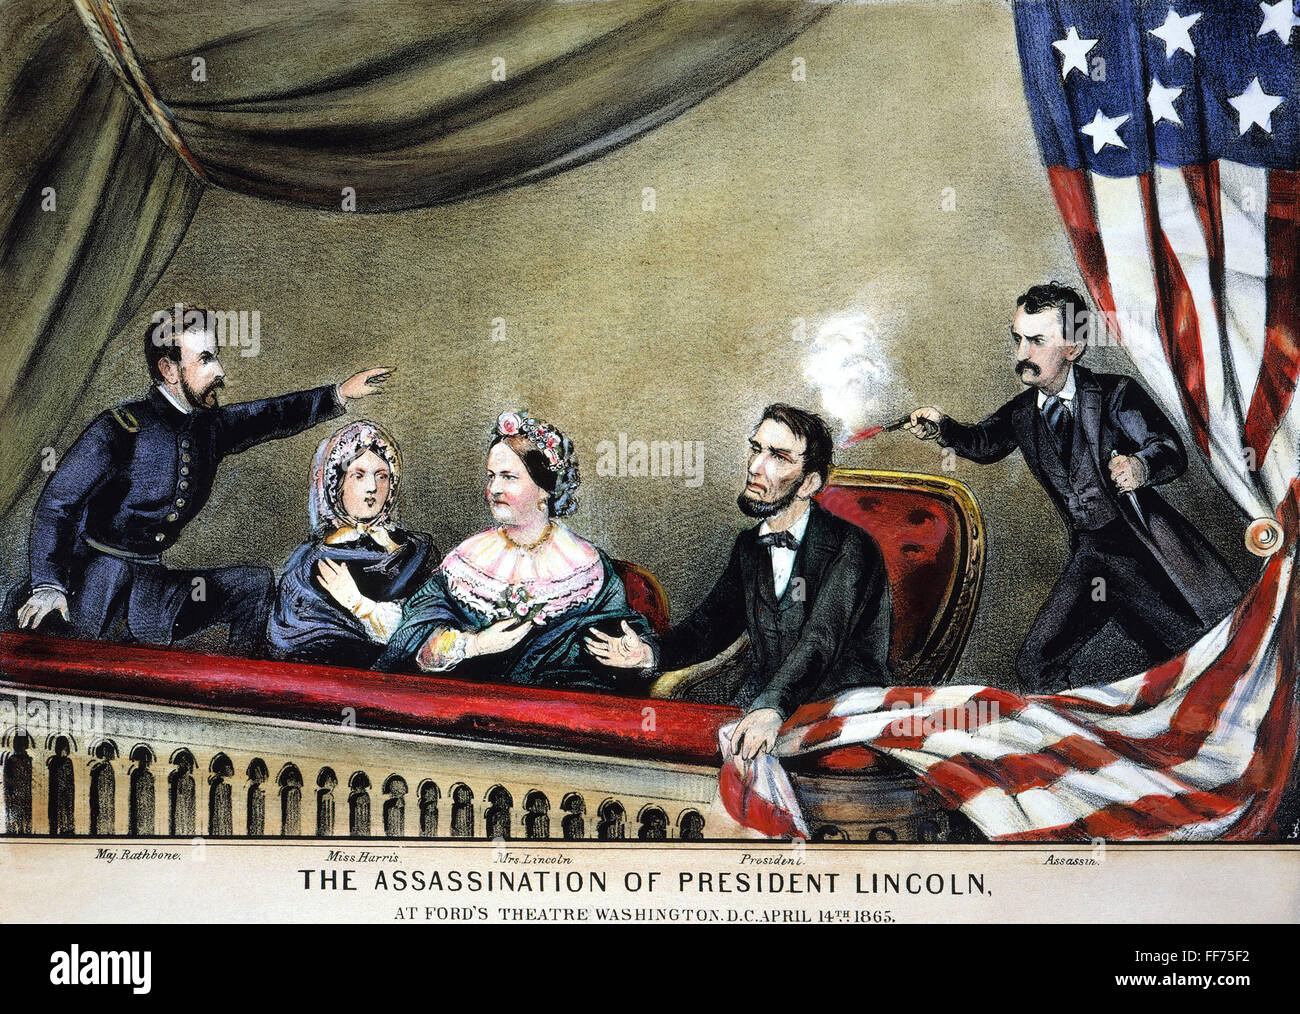 LINCOLN-ATTENTAT. /nThe Attentat auf Präsident Abraham Lincoln von John Wilkes Booth im Ford Theater, Washington, D.C., 14. April 1865. Lithographie, 1865, von Currier & Ives. Stockfoto